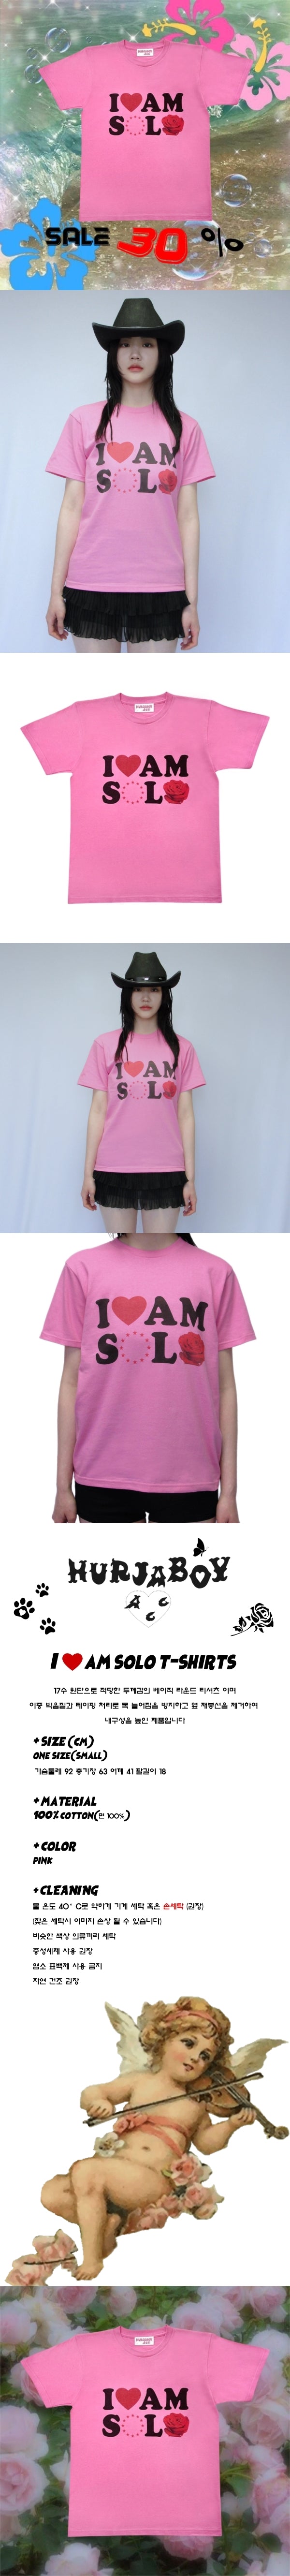 I ¢½ AM SOLO t-shirts